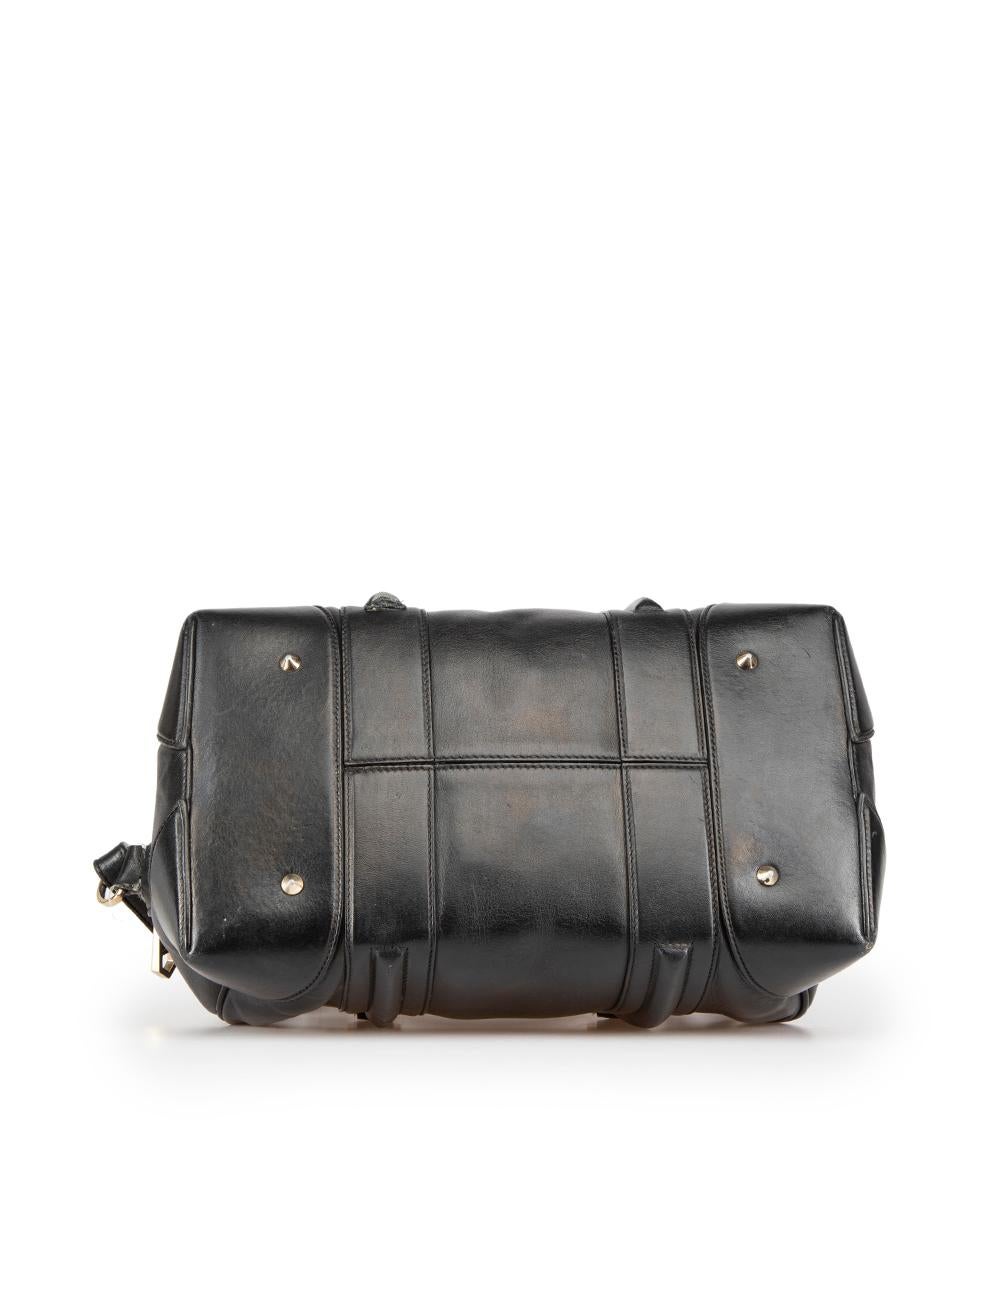 Women's Givenchy Black Leather Small Antigona Handbag For Sale